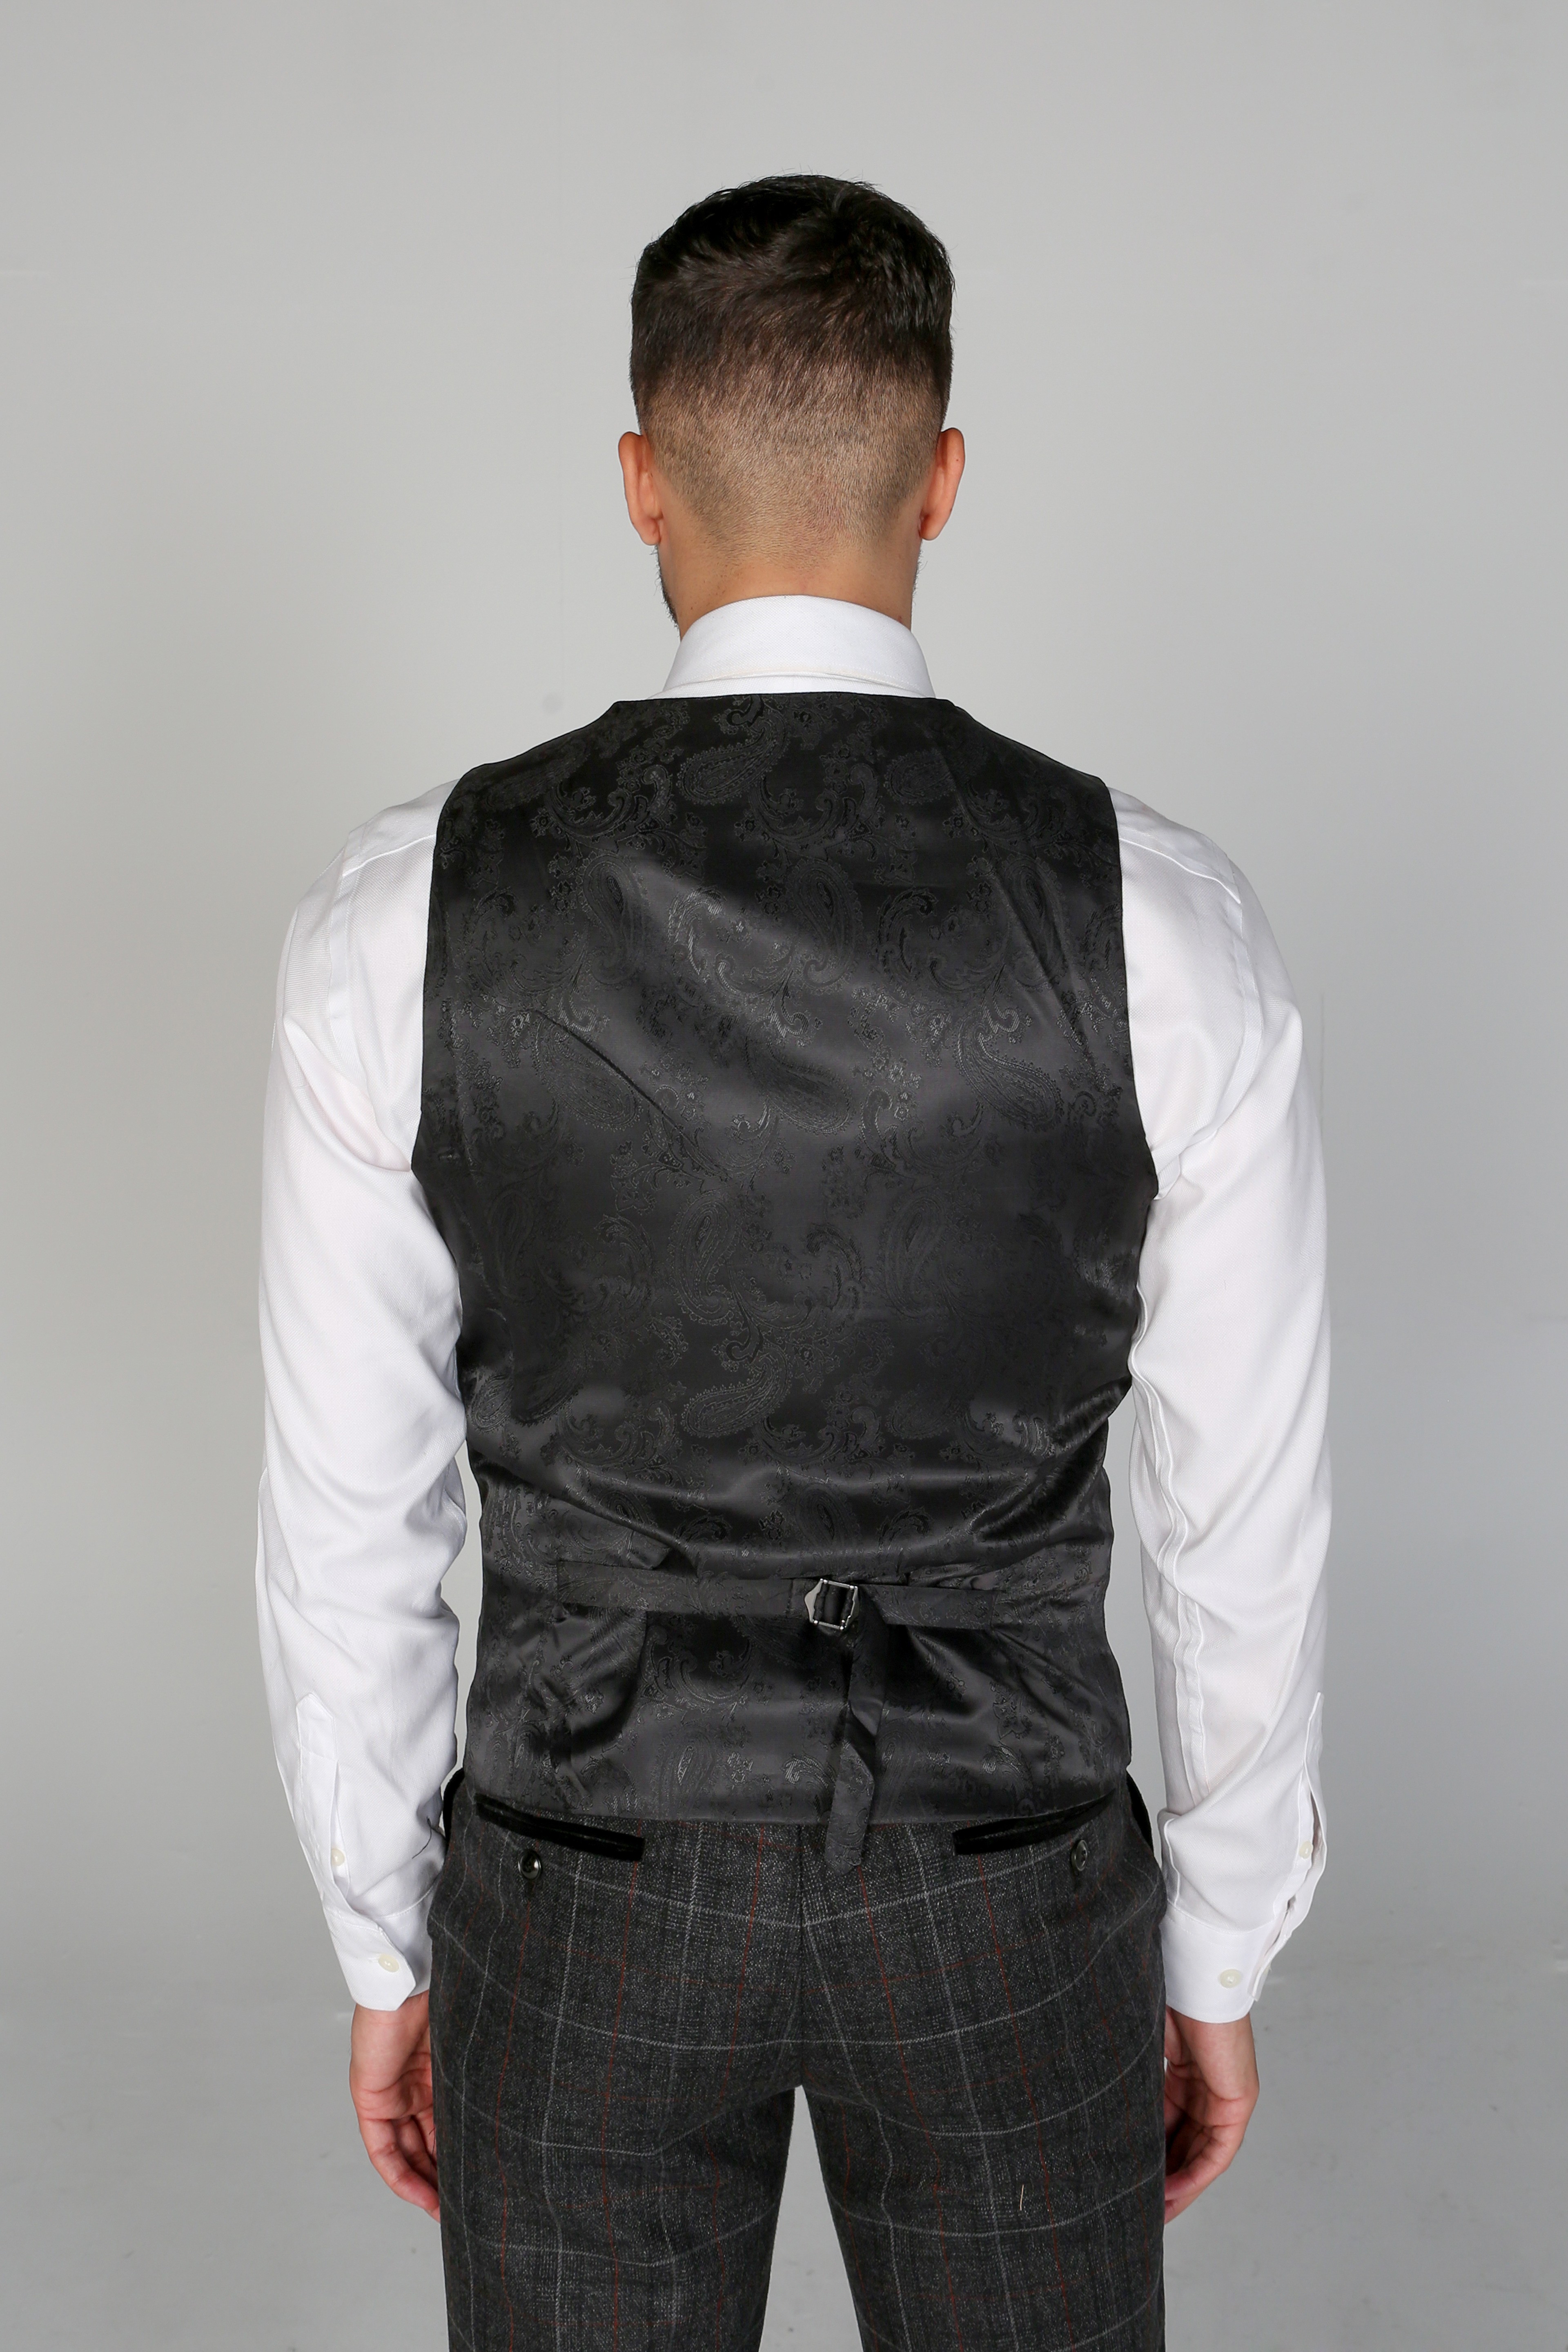 Men's Windowpane Tailored Fit Suit- HARVEY - Charcoal Grey